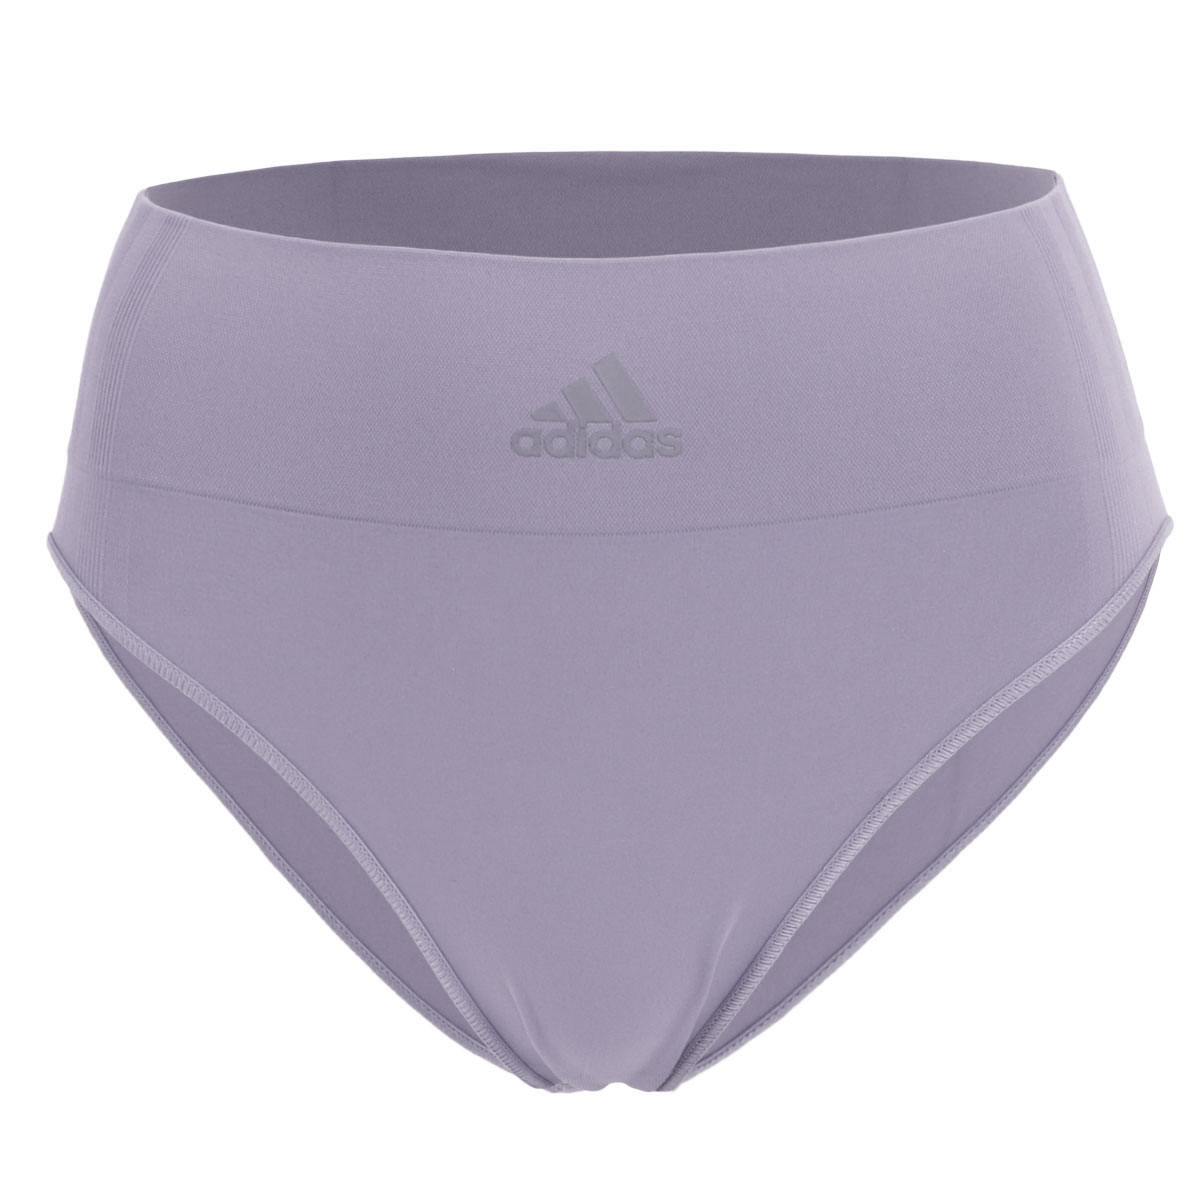 https://images.bike24.com/i/mb/47/0e/99/adidas-sports-underwear-high-leg-damen-unterhose-720-silver-violet-1475156.jpg